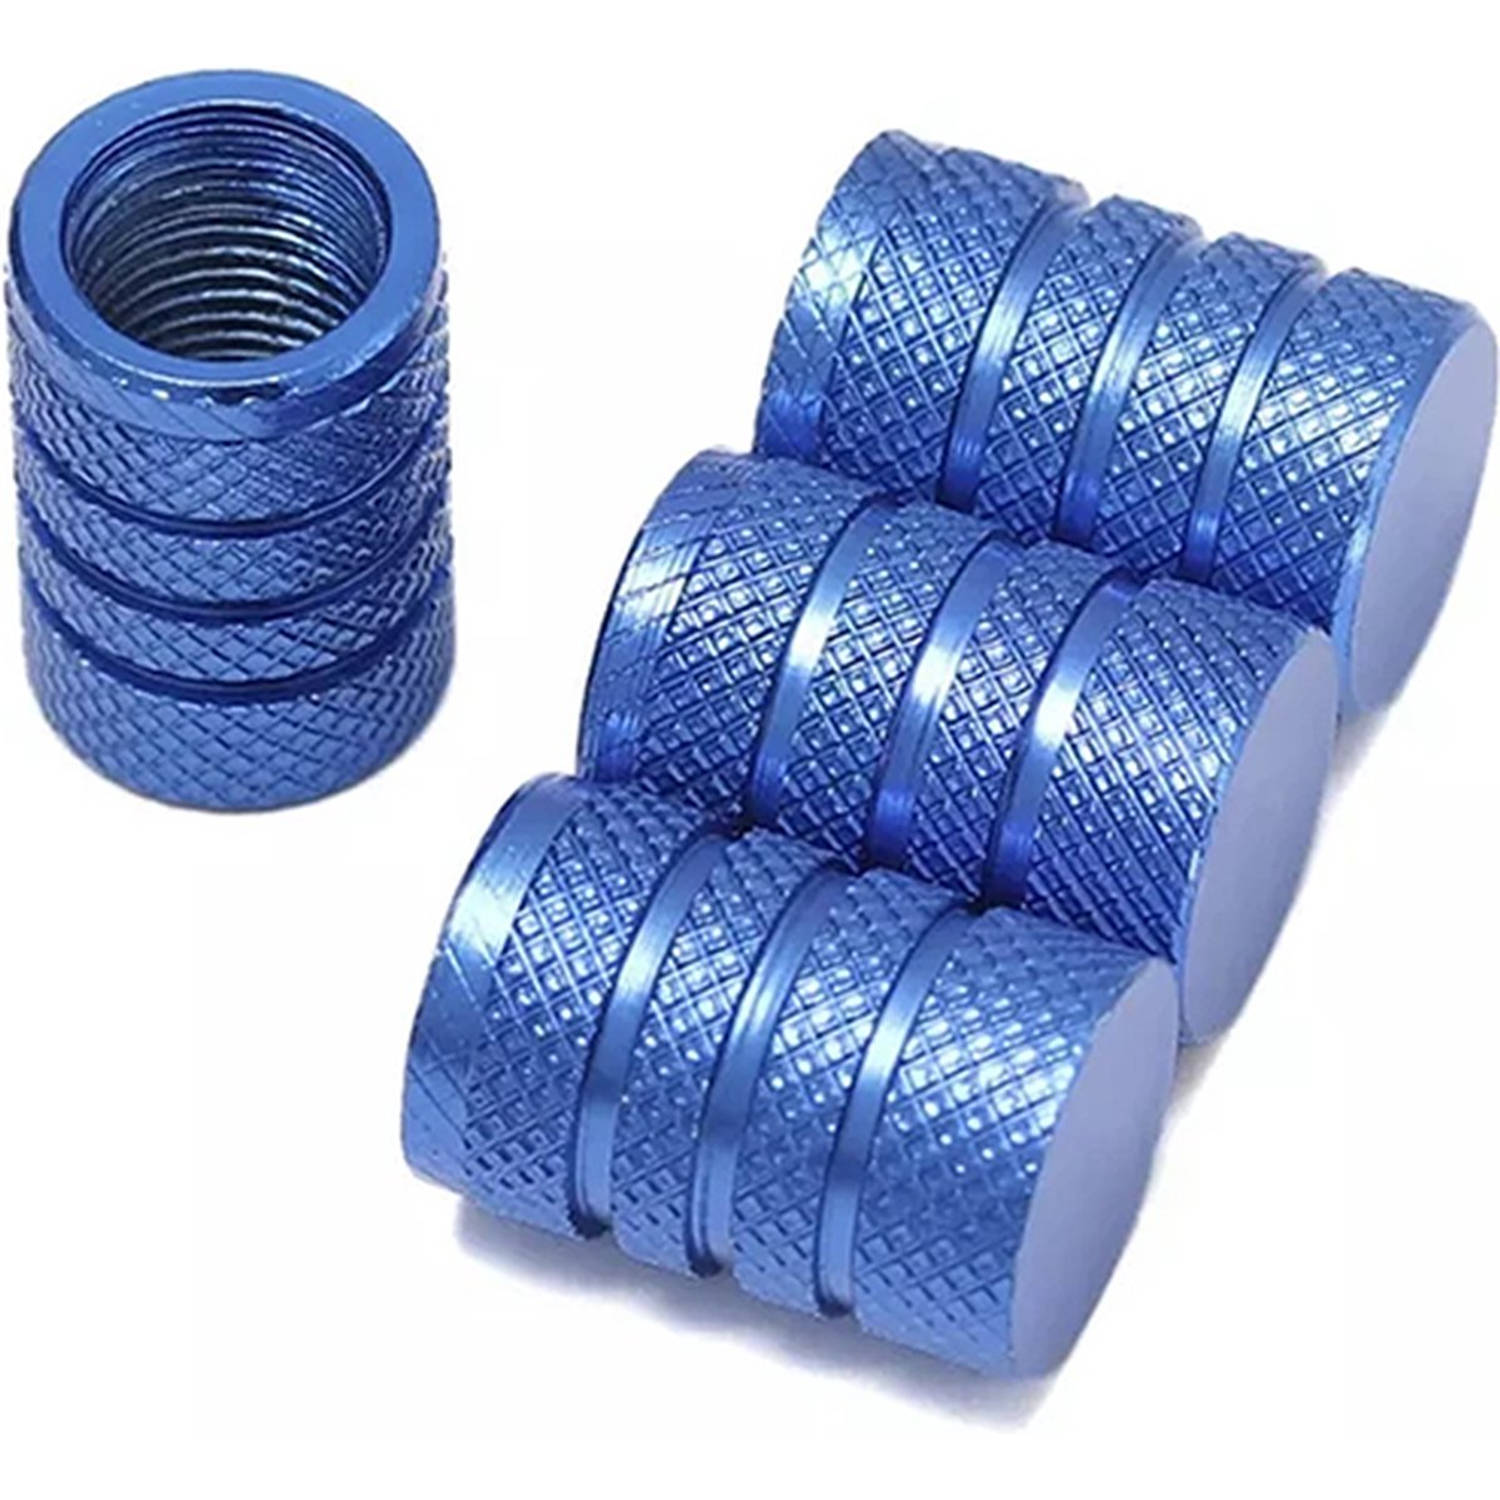 TT-products ventieldoppen 3-rings Blue aluminium 4 stuks blauw auto ventieldop ventieldopjes